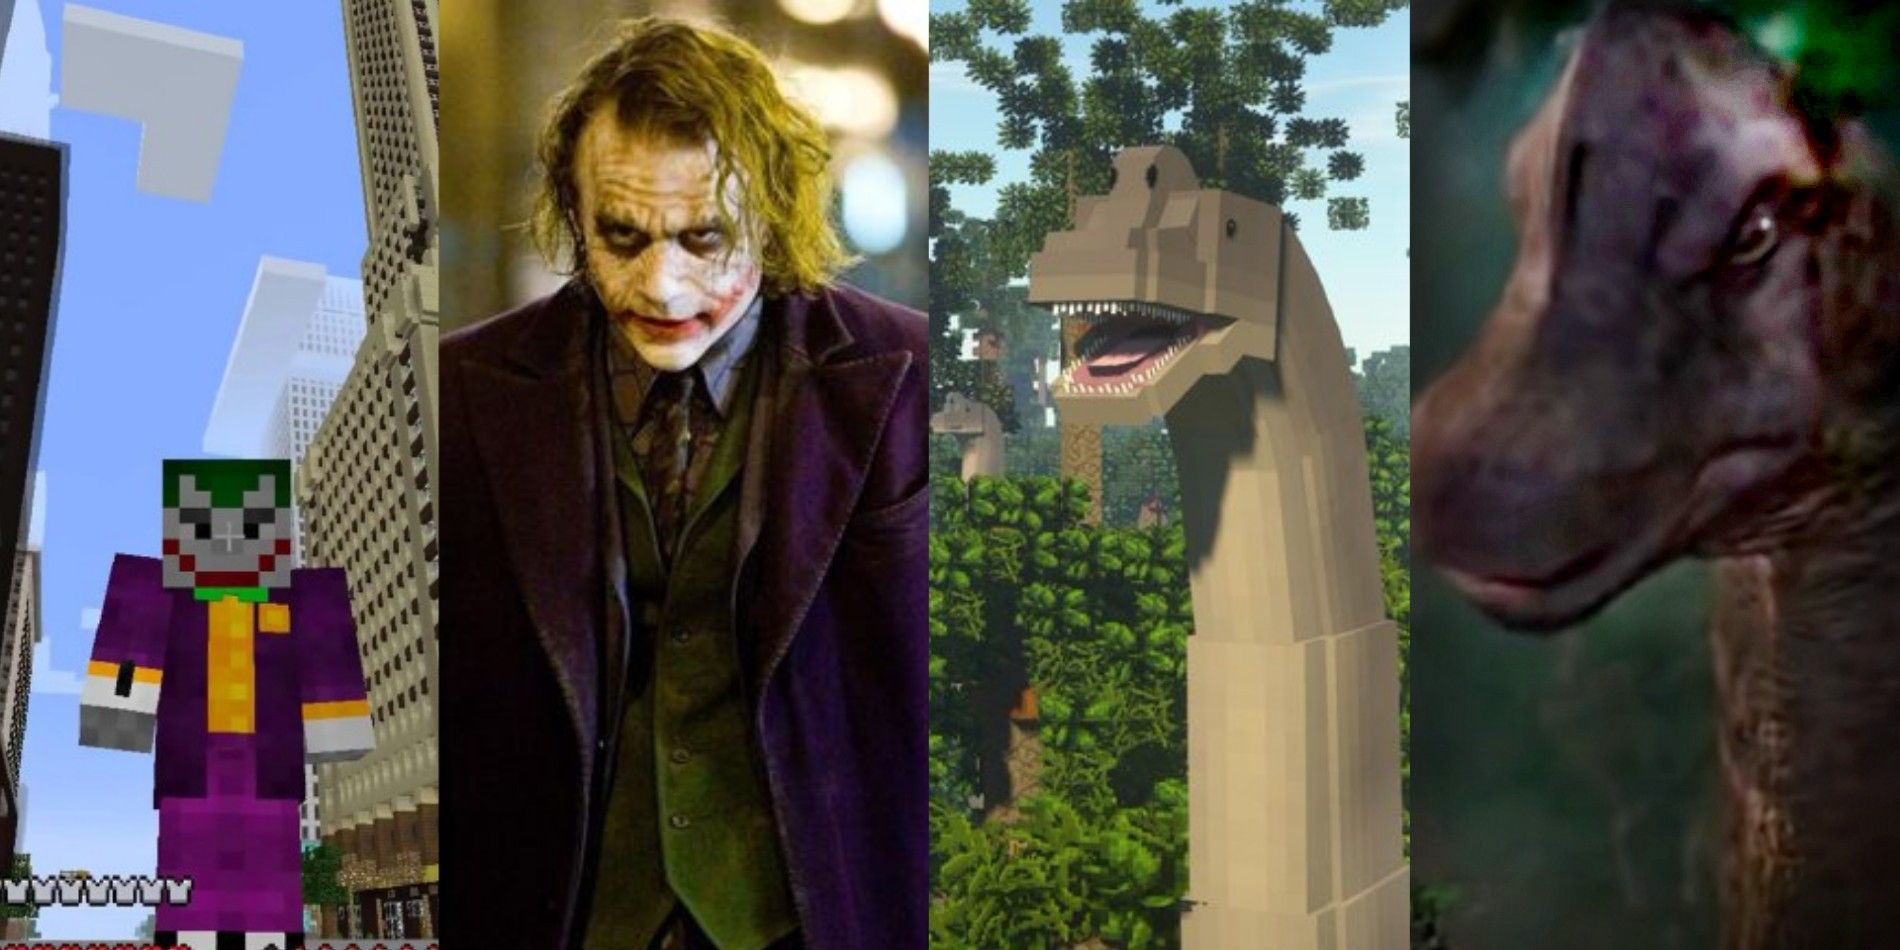 The Joker from The Dark Knight and the brachiosaurus from Jurassic Park